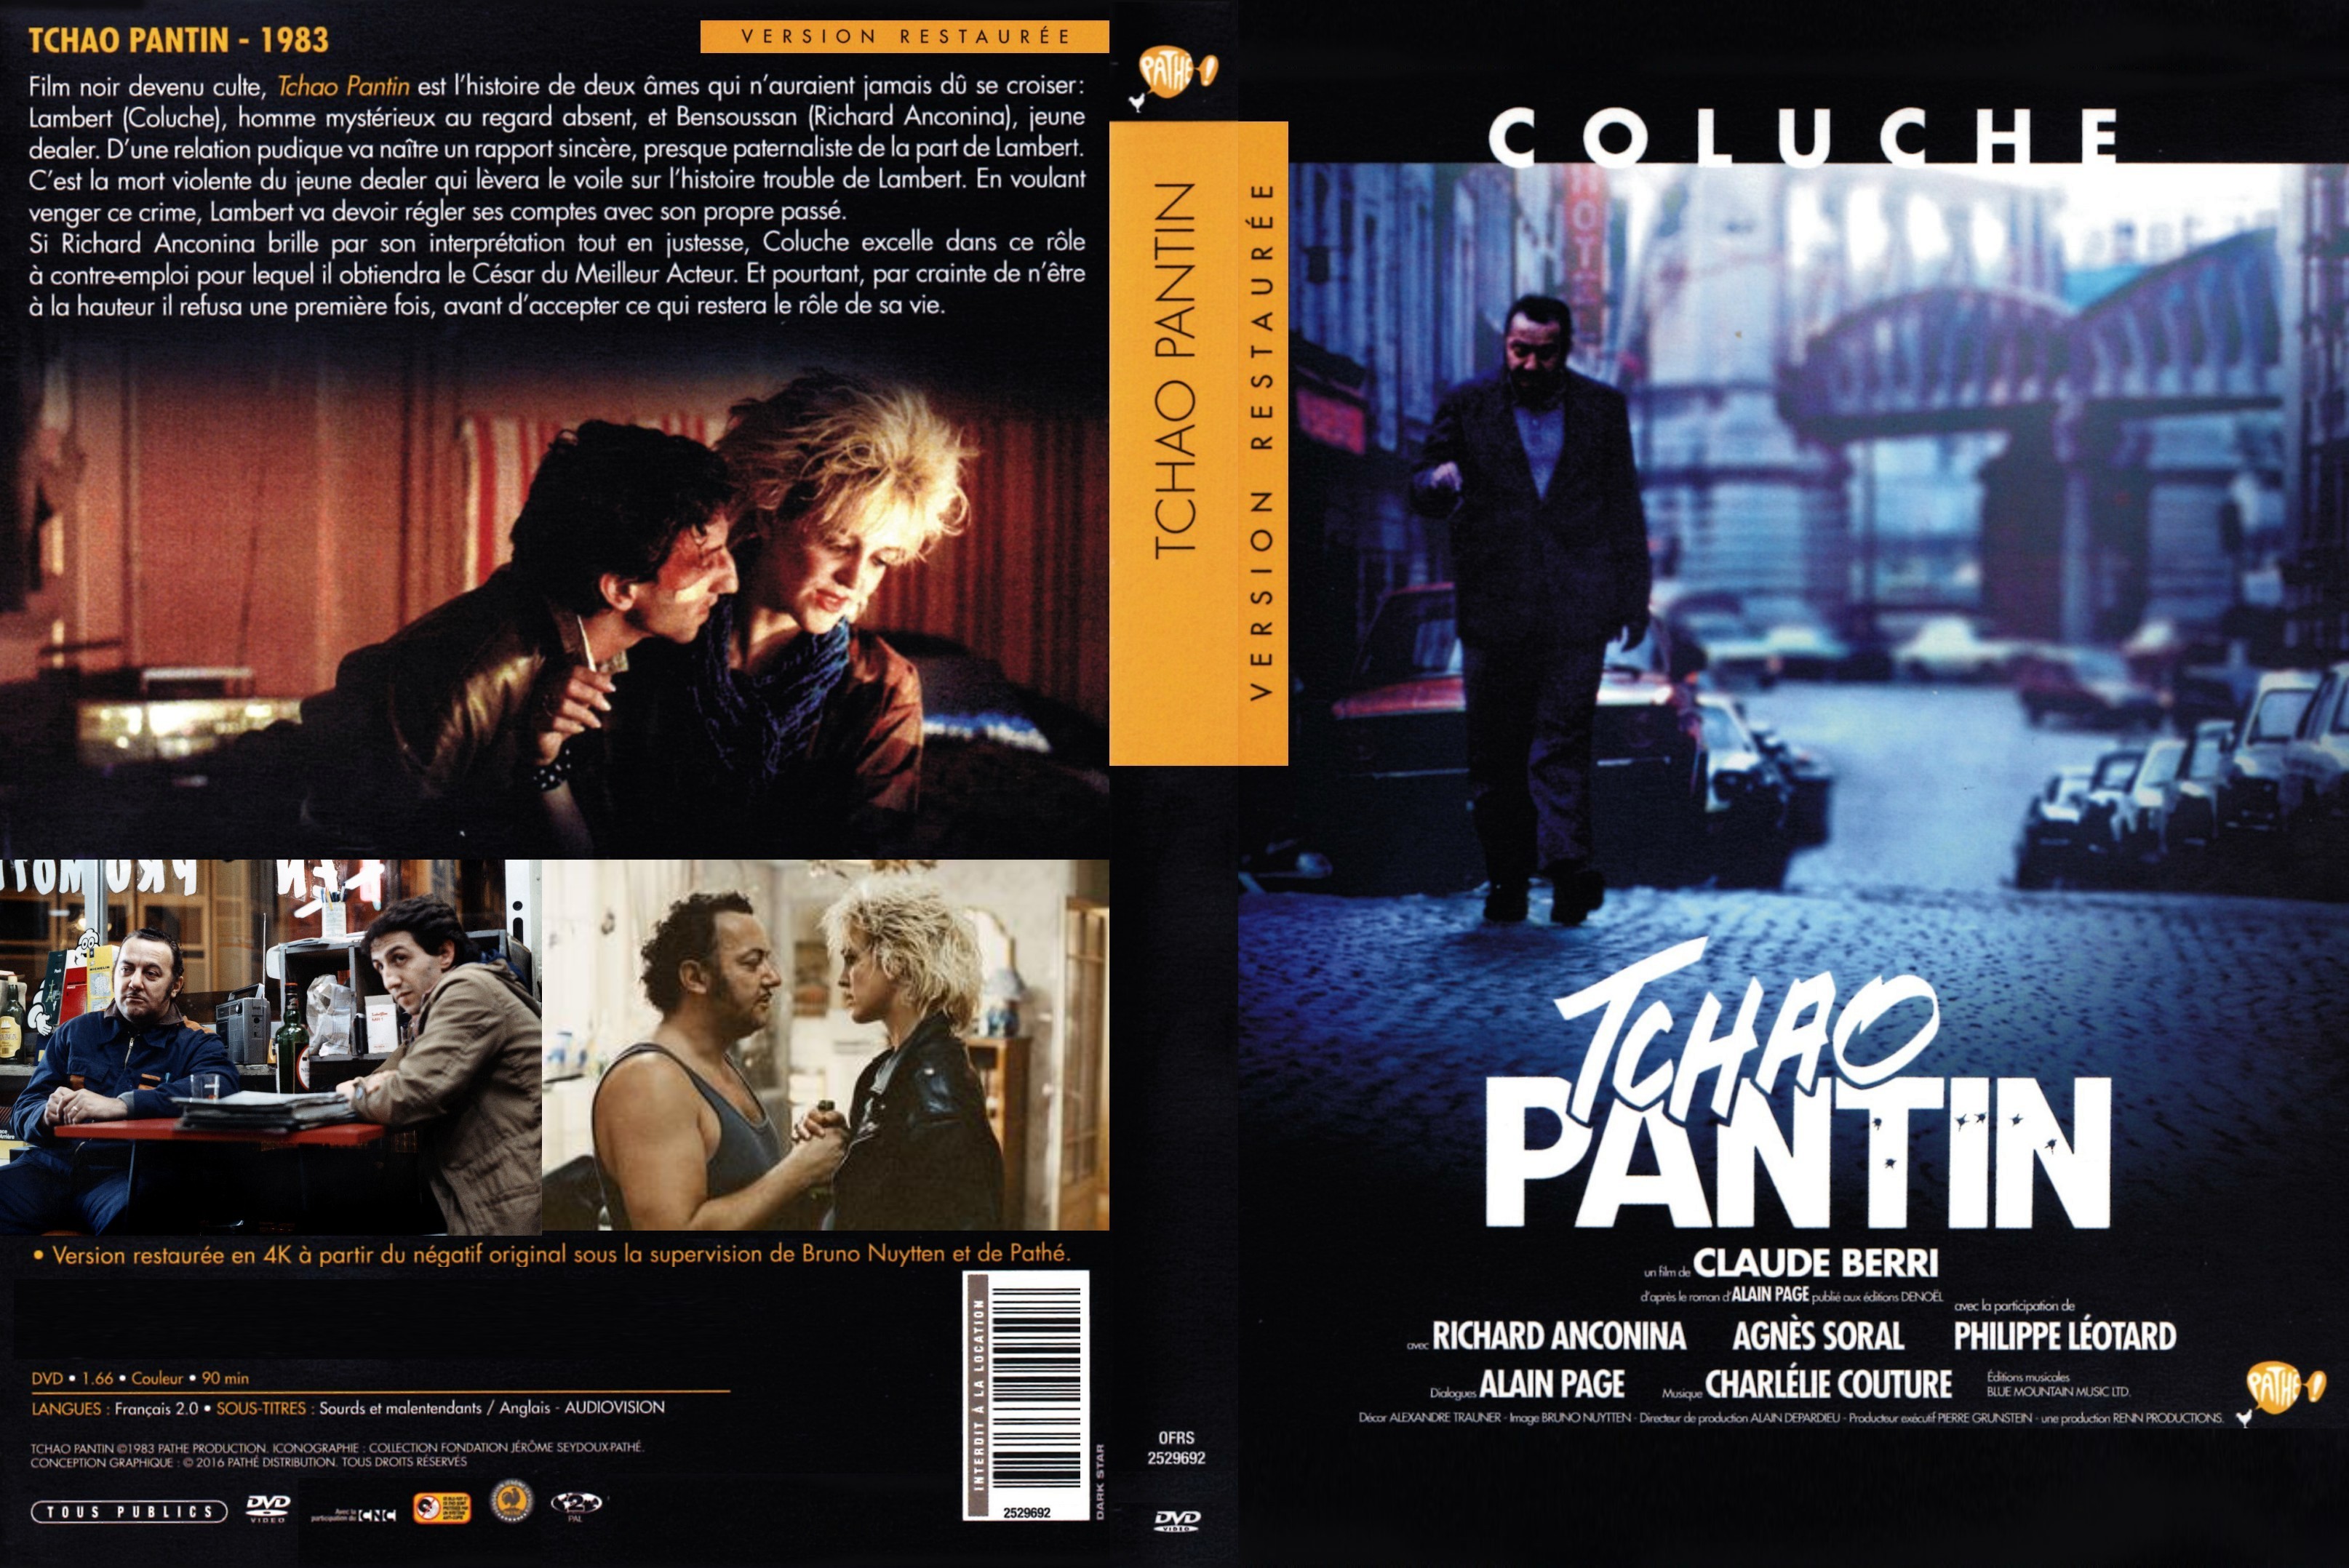 Jaquette DVD Tchao Pantin v6